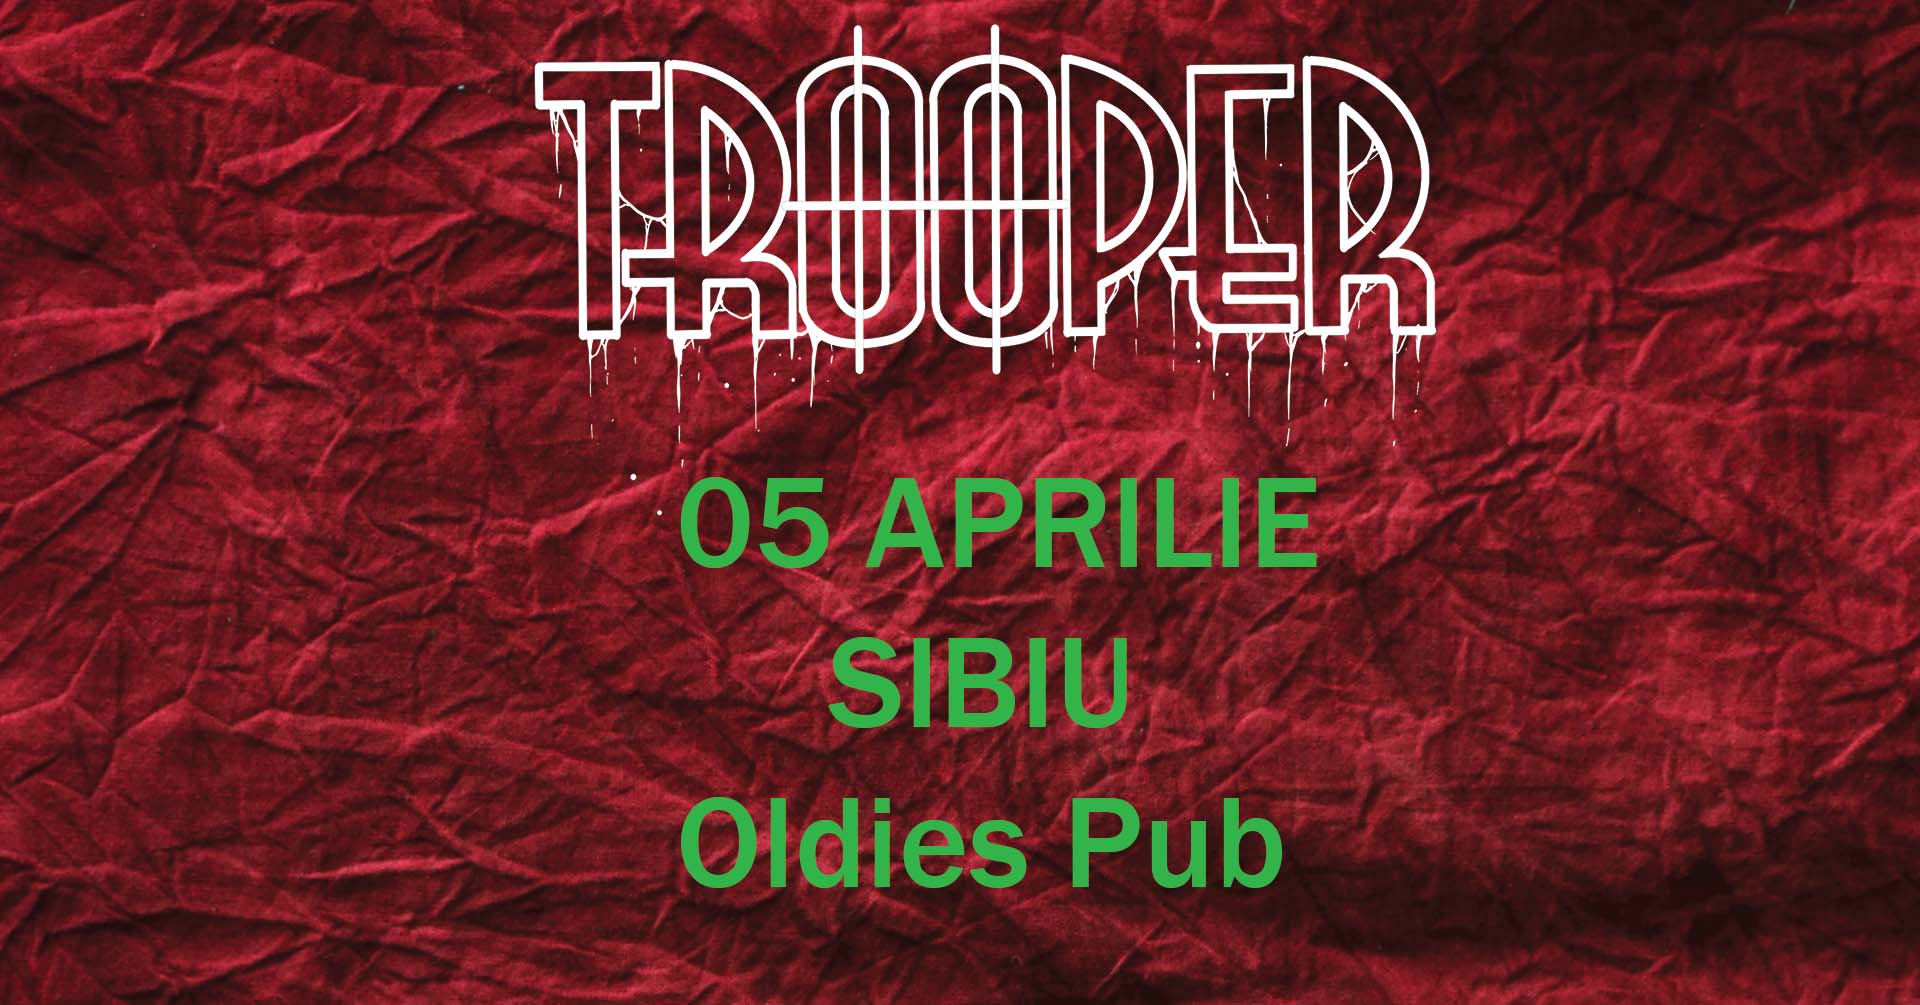 TROOPER | SIBIU | OLDIES PUB